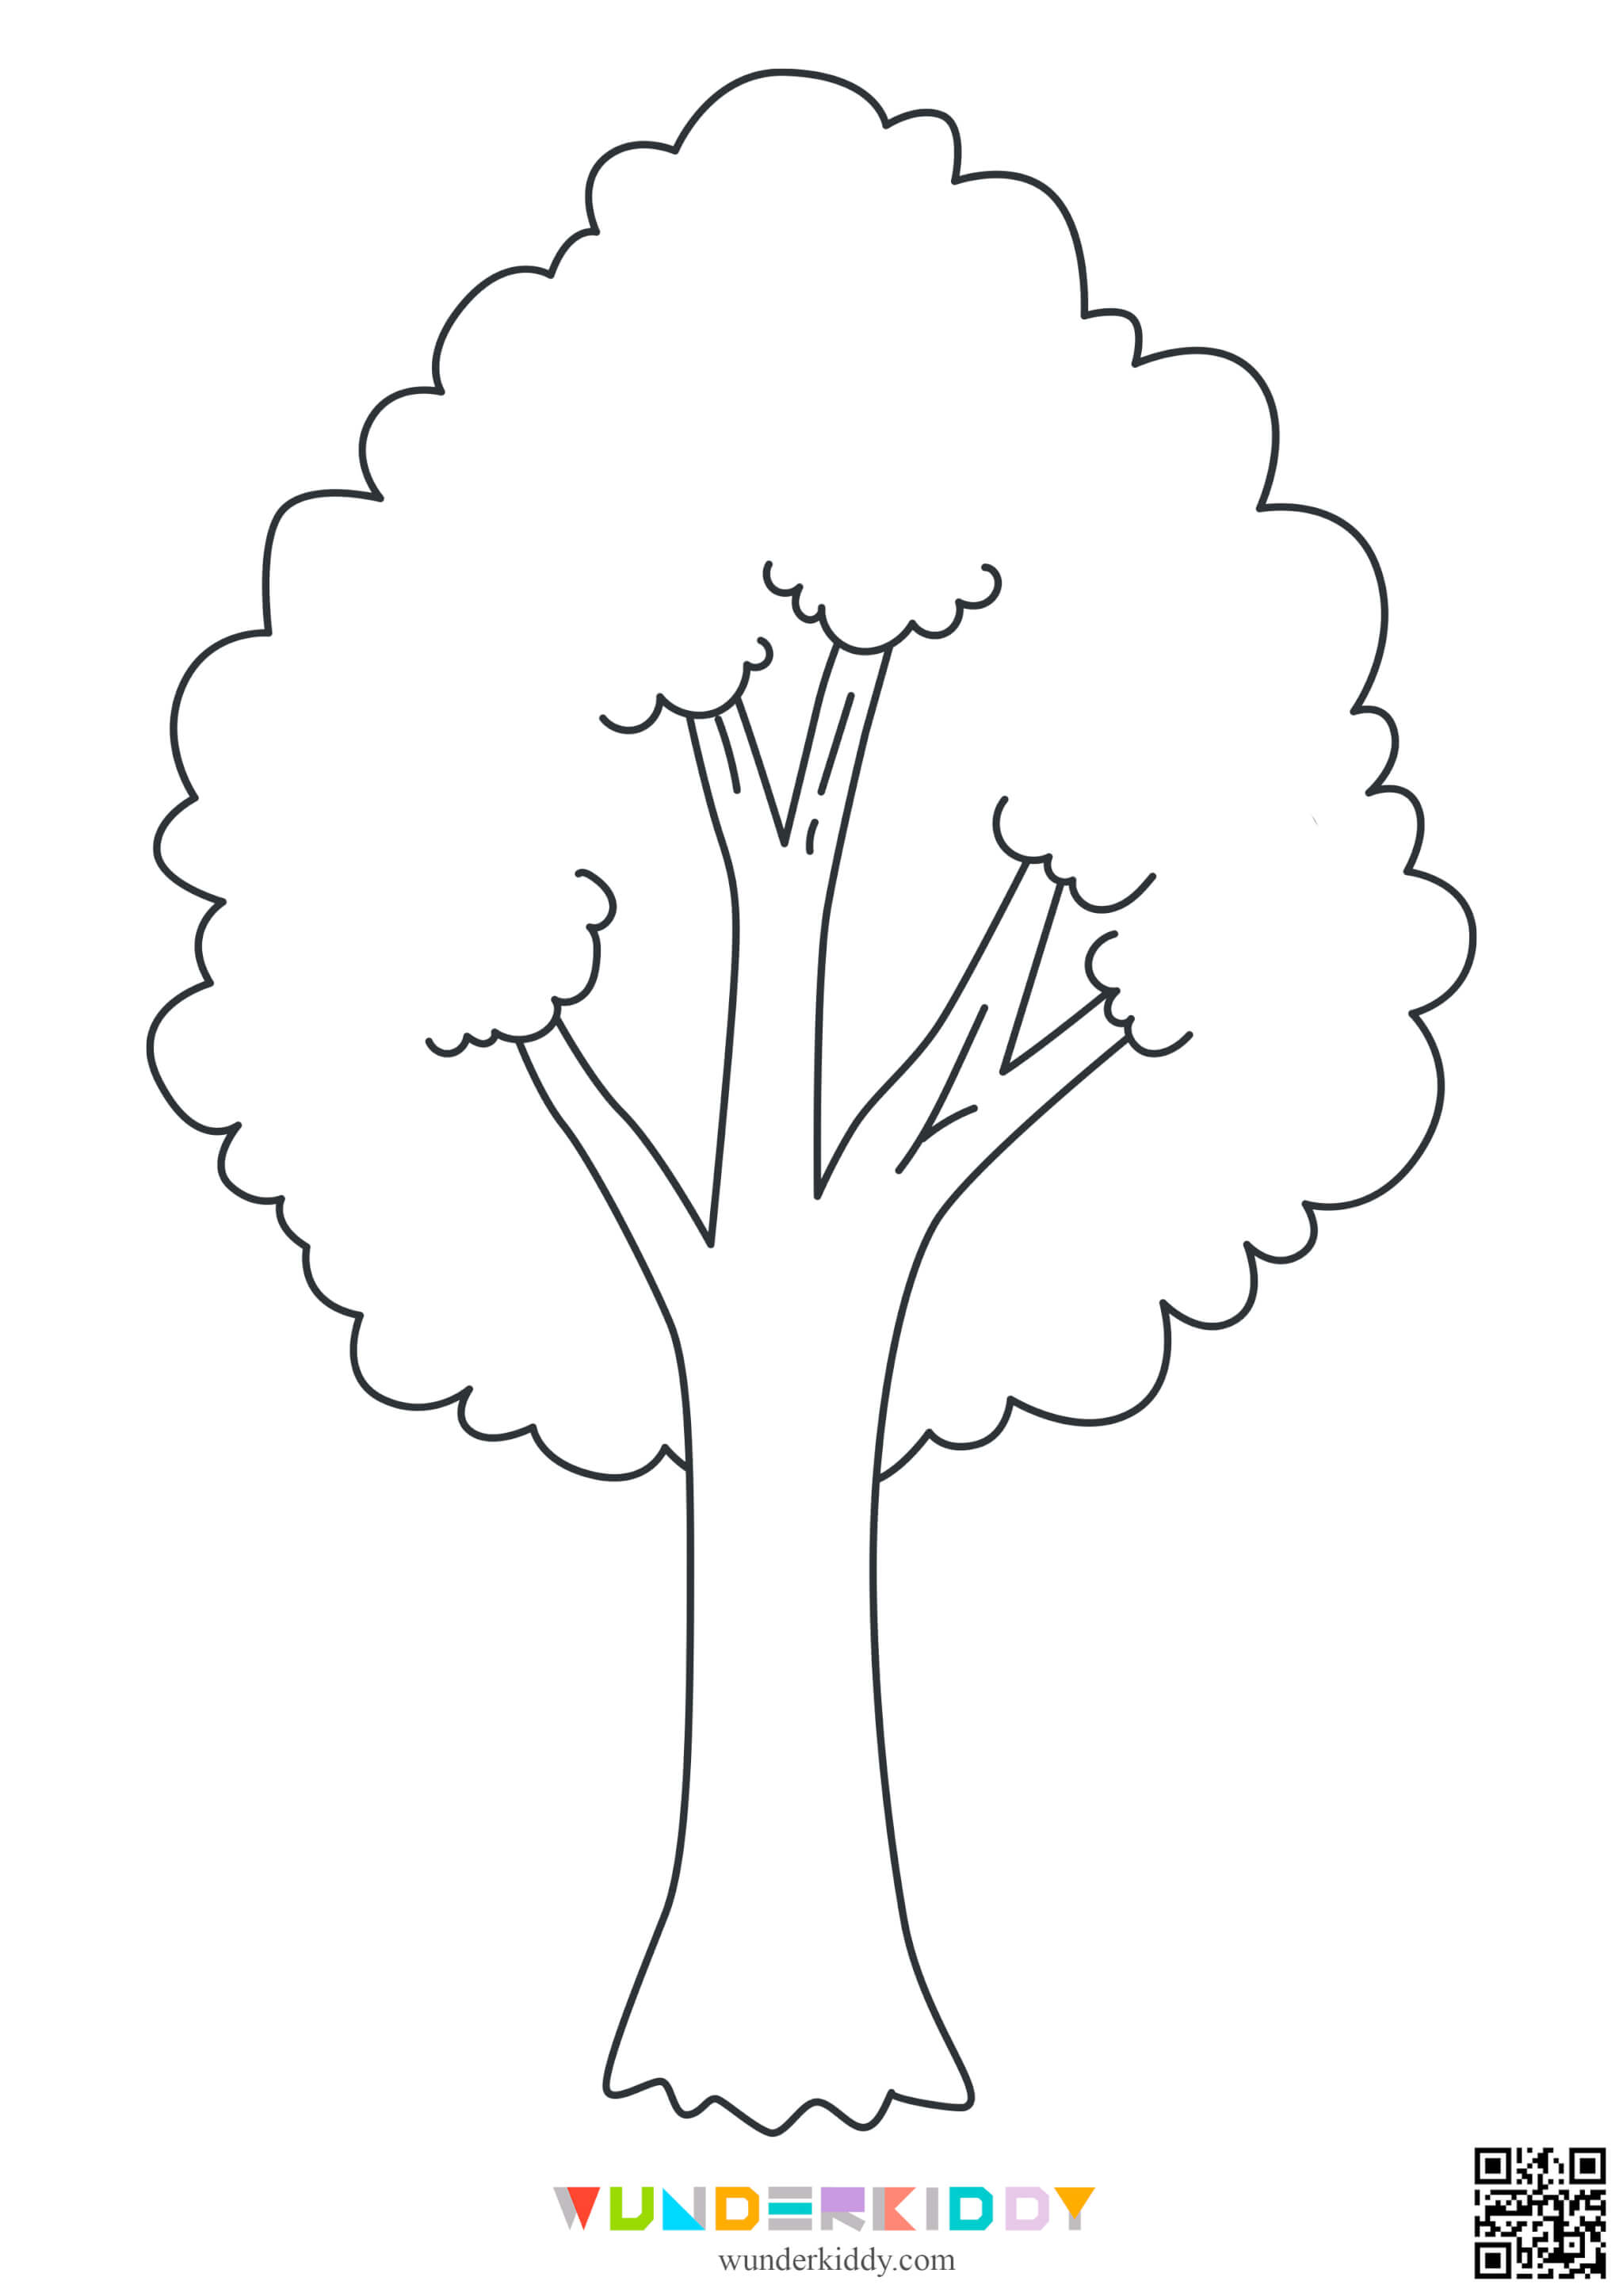 Free Tree Template - Image 3